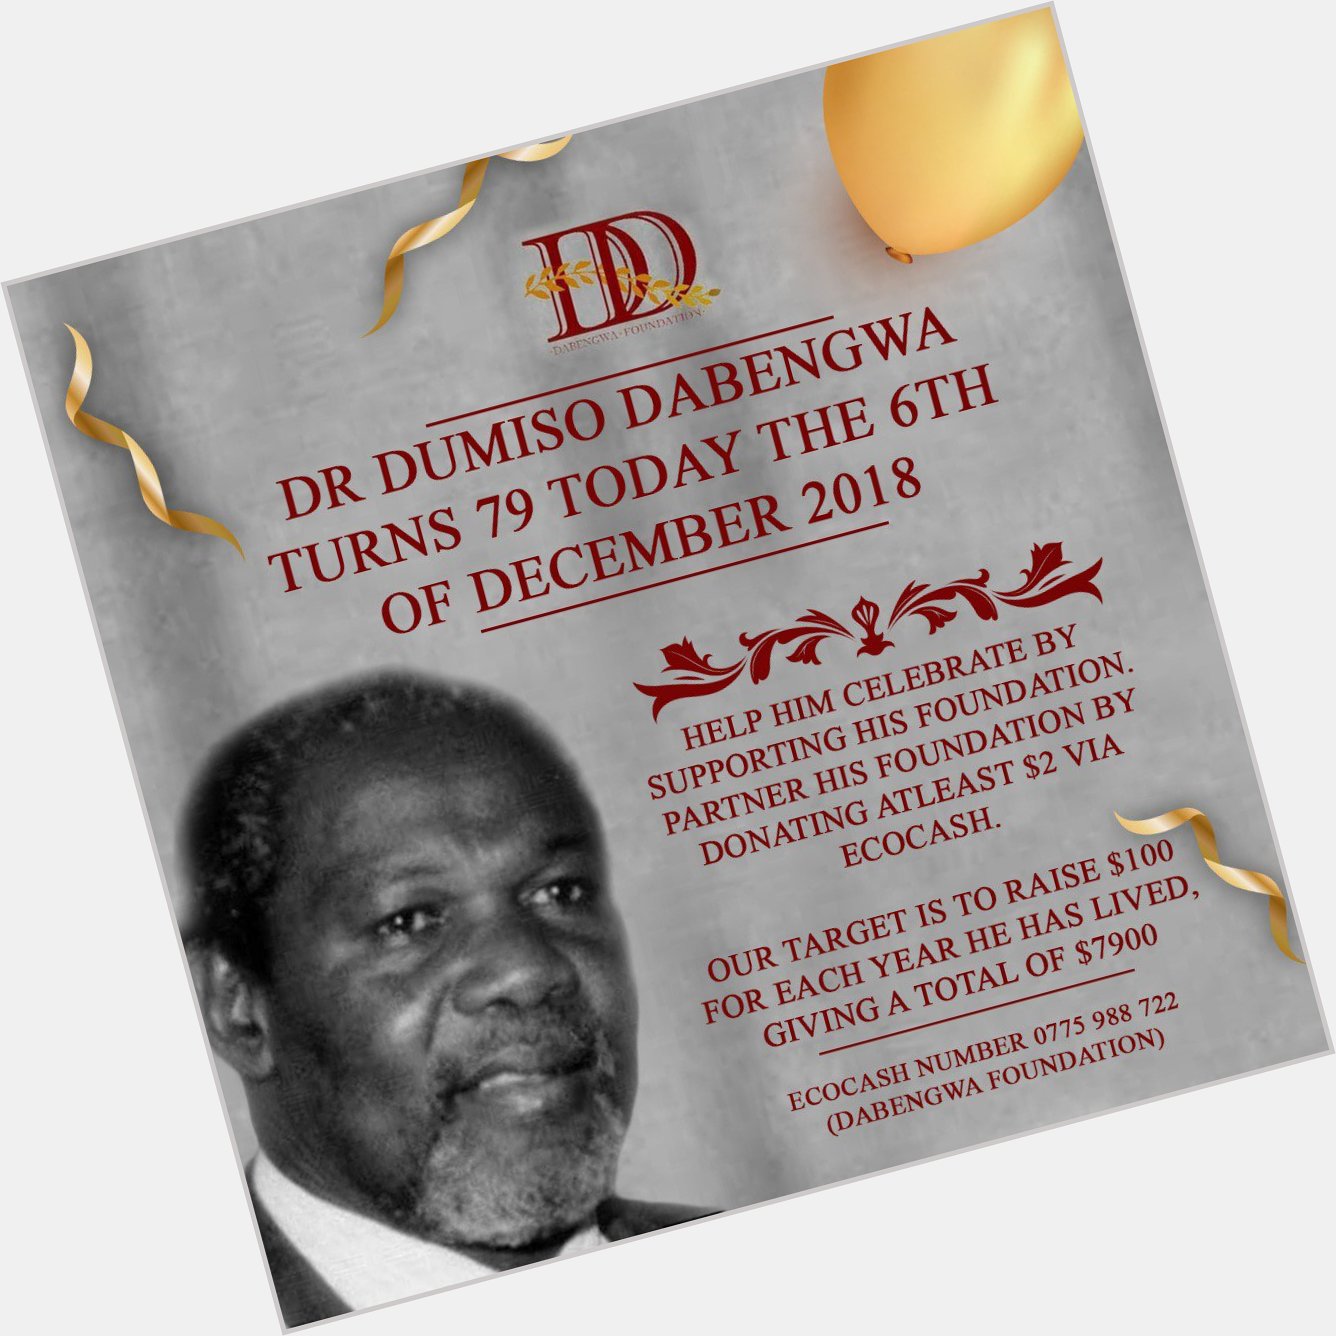 Wishing liberation struggle icon Dumiso Dabengwa a happy 79th birthday. 